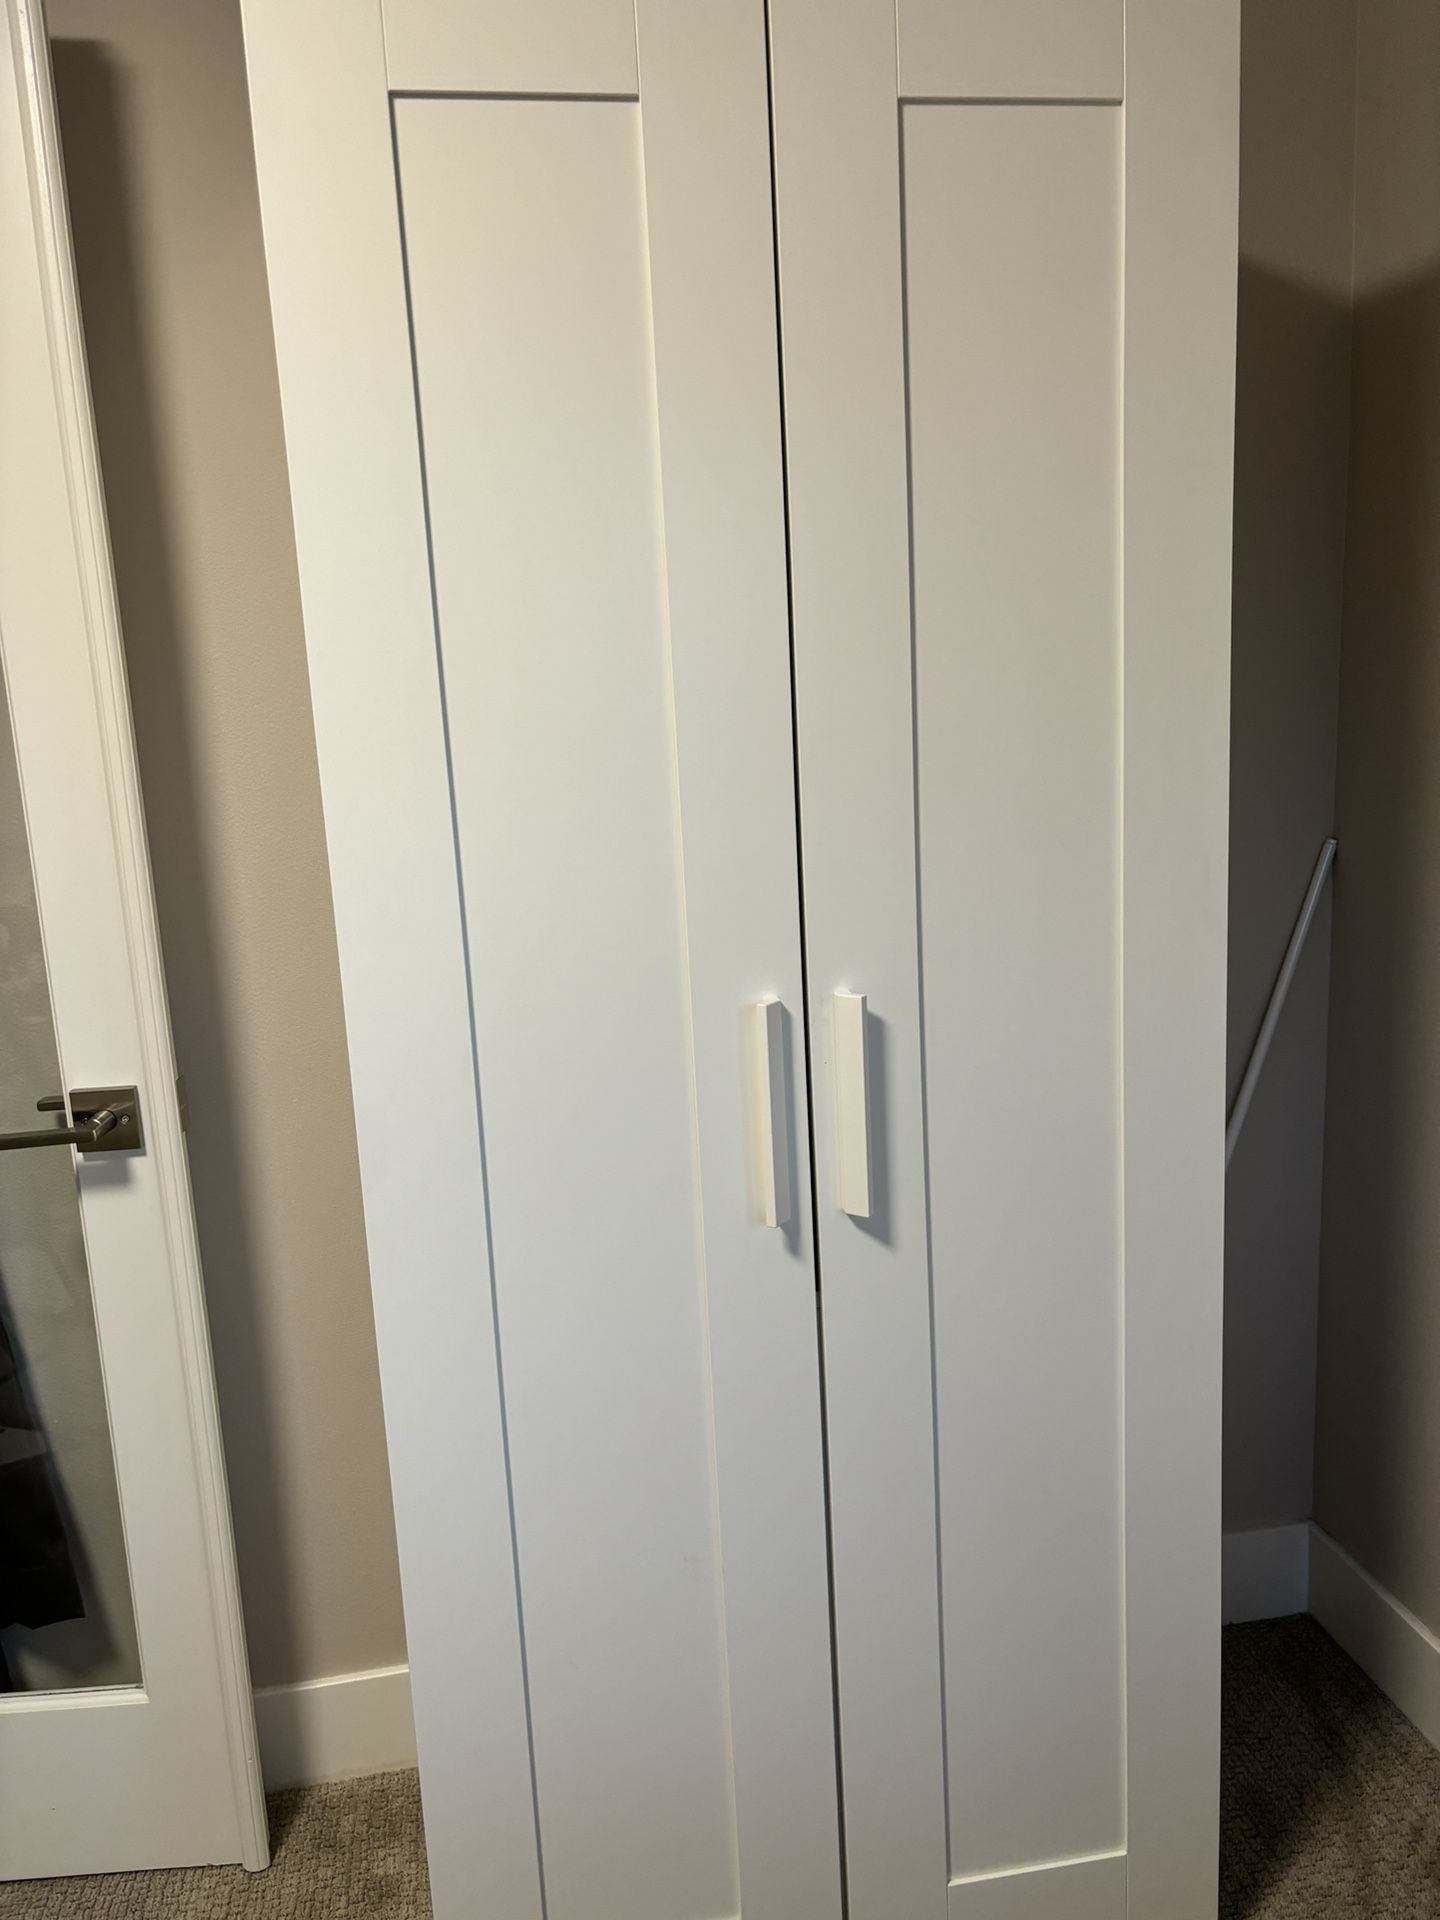 IKEA Wardrobe with 2 doors